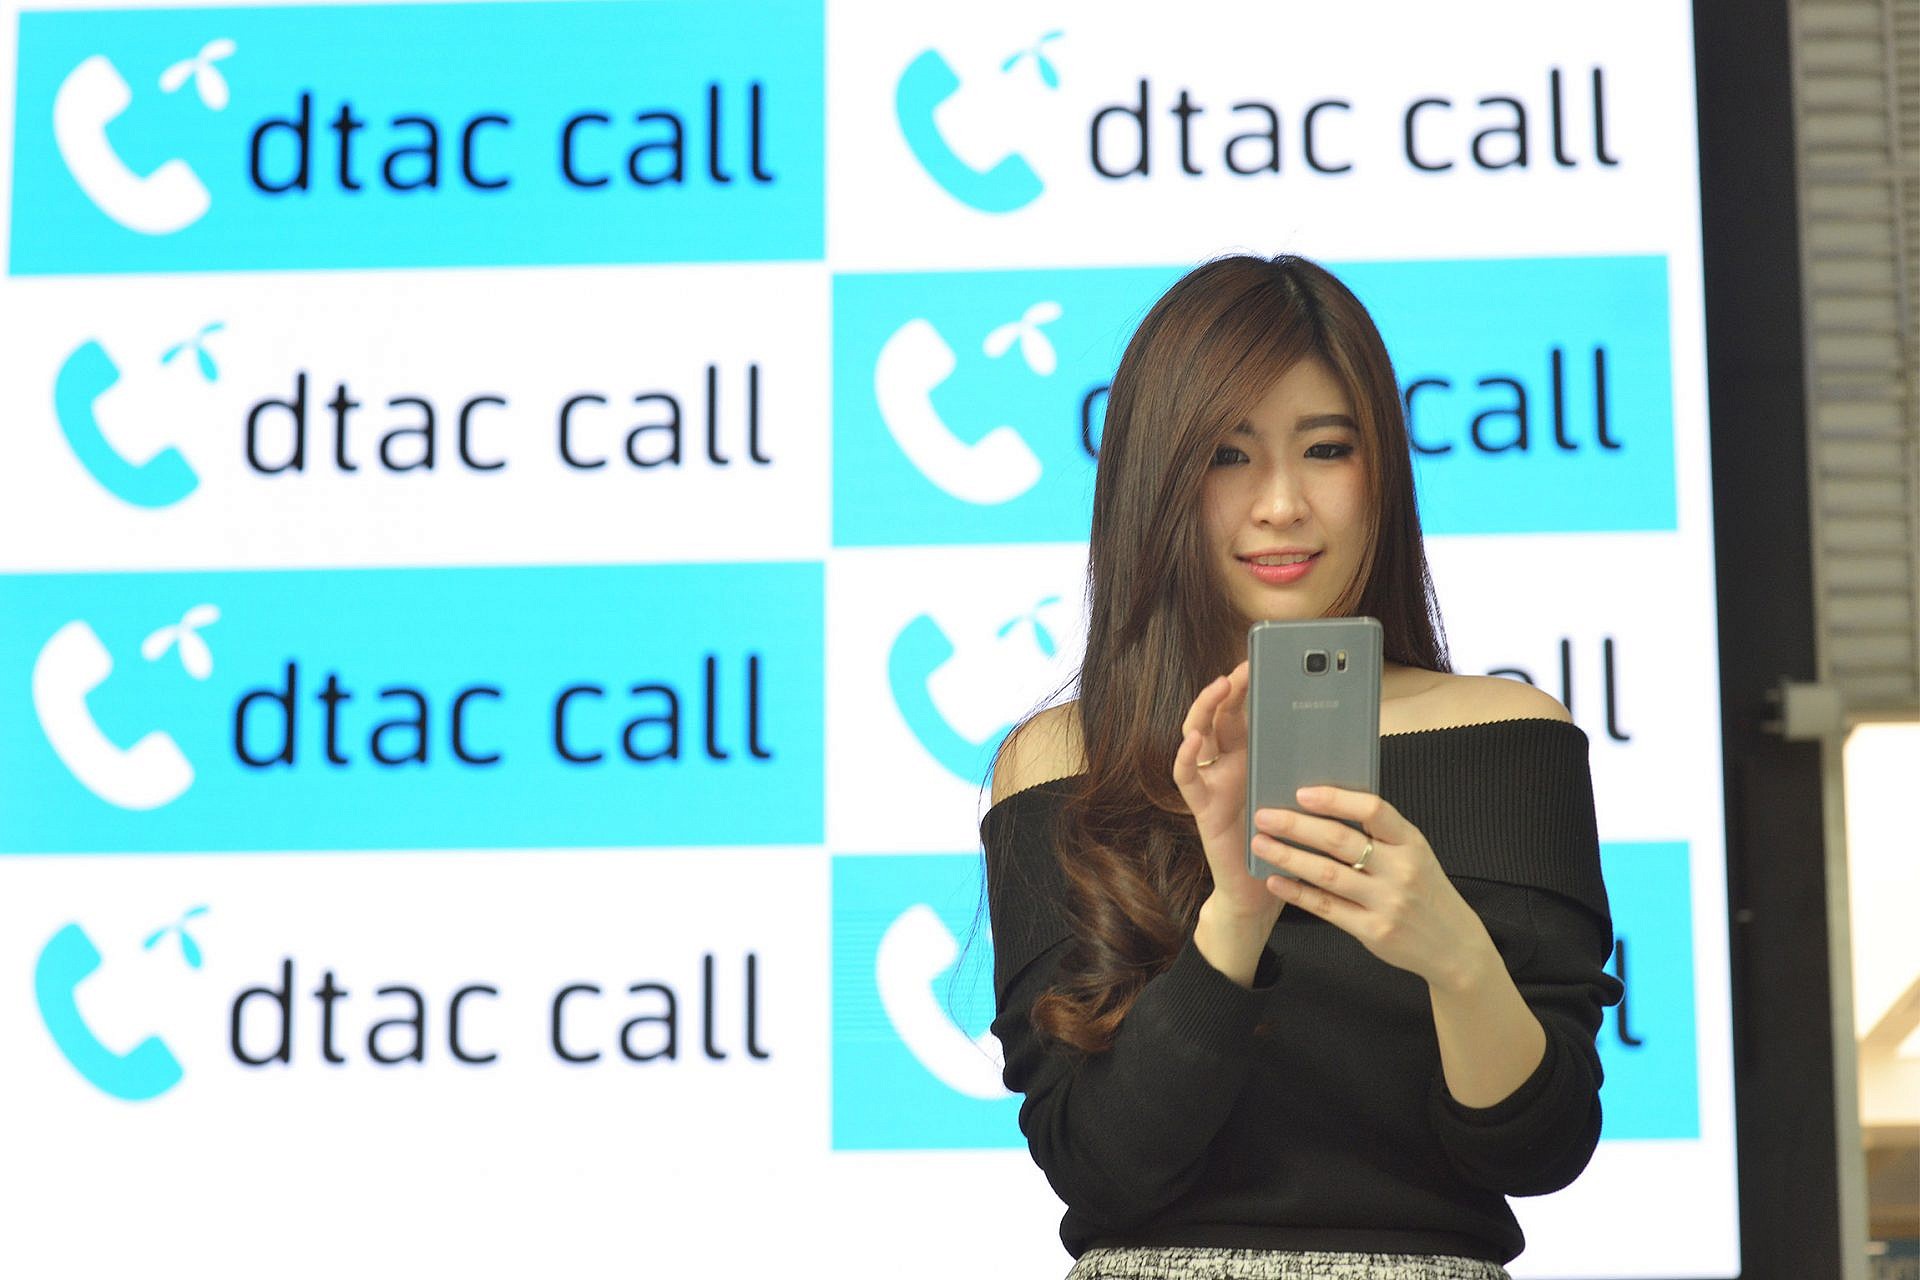 dtac Call การโทรฯ ในรูปแบบ Wifi Calling ที่โทรผ่านเน็ต 3G 4G ได้!?